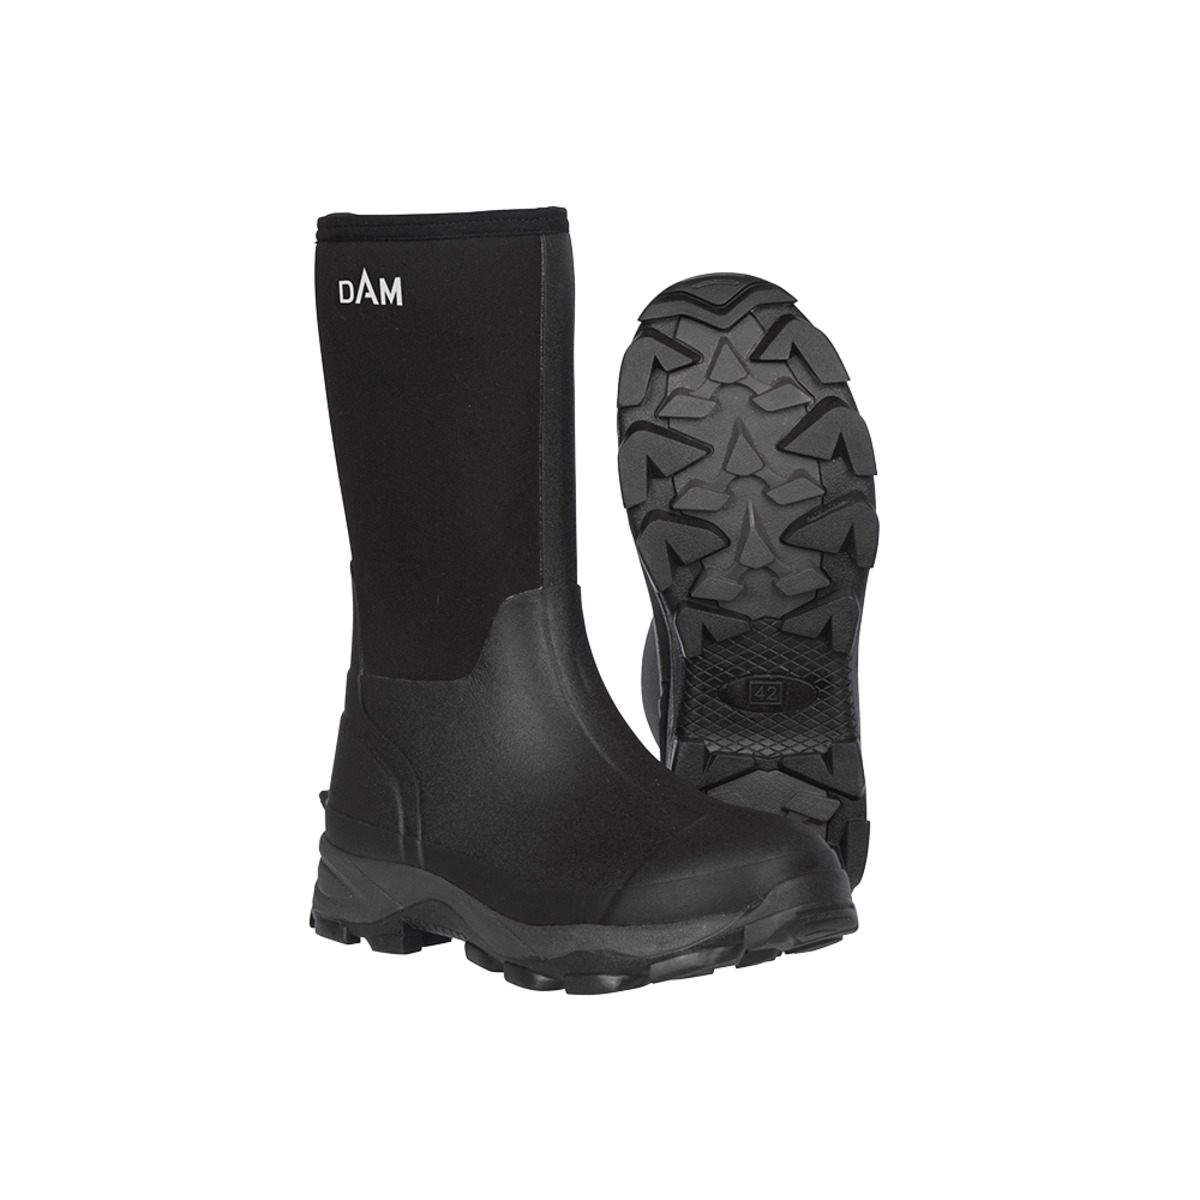 Dam Tira Boots Rubber/neoprene - 45/10 BLACK